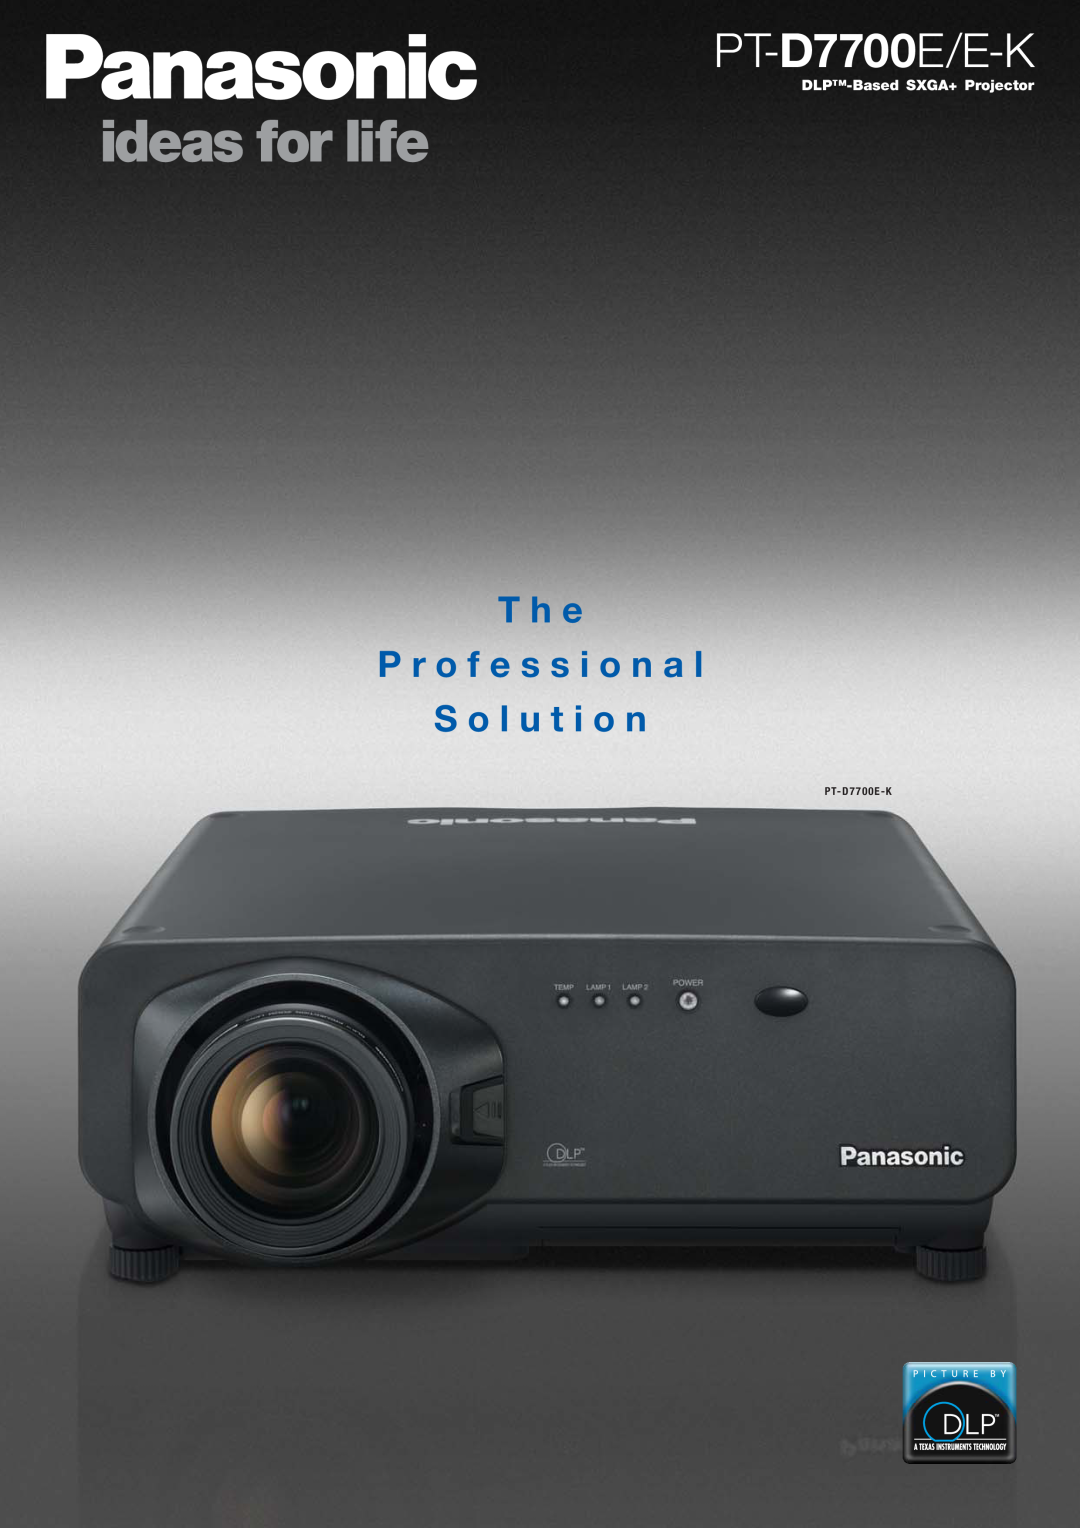 Panasonic PT-D7700E-K manual PT-D7700E/E-K, T h e P r o f e s s i o n a l S o l u t i o n, DLP-Based SXGA+ Projector 